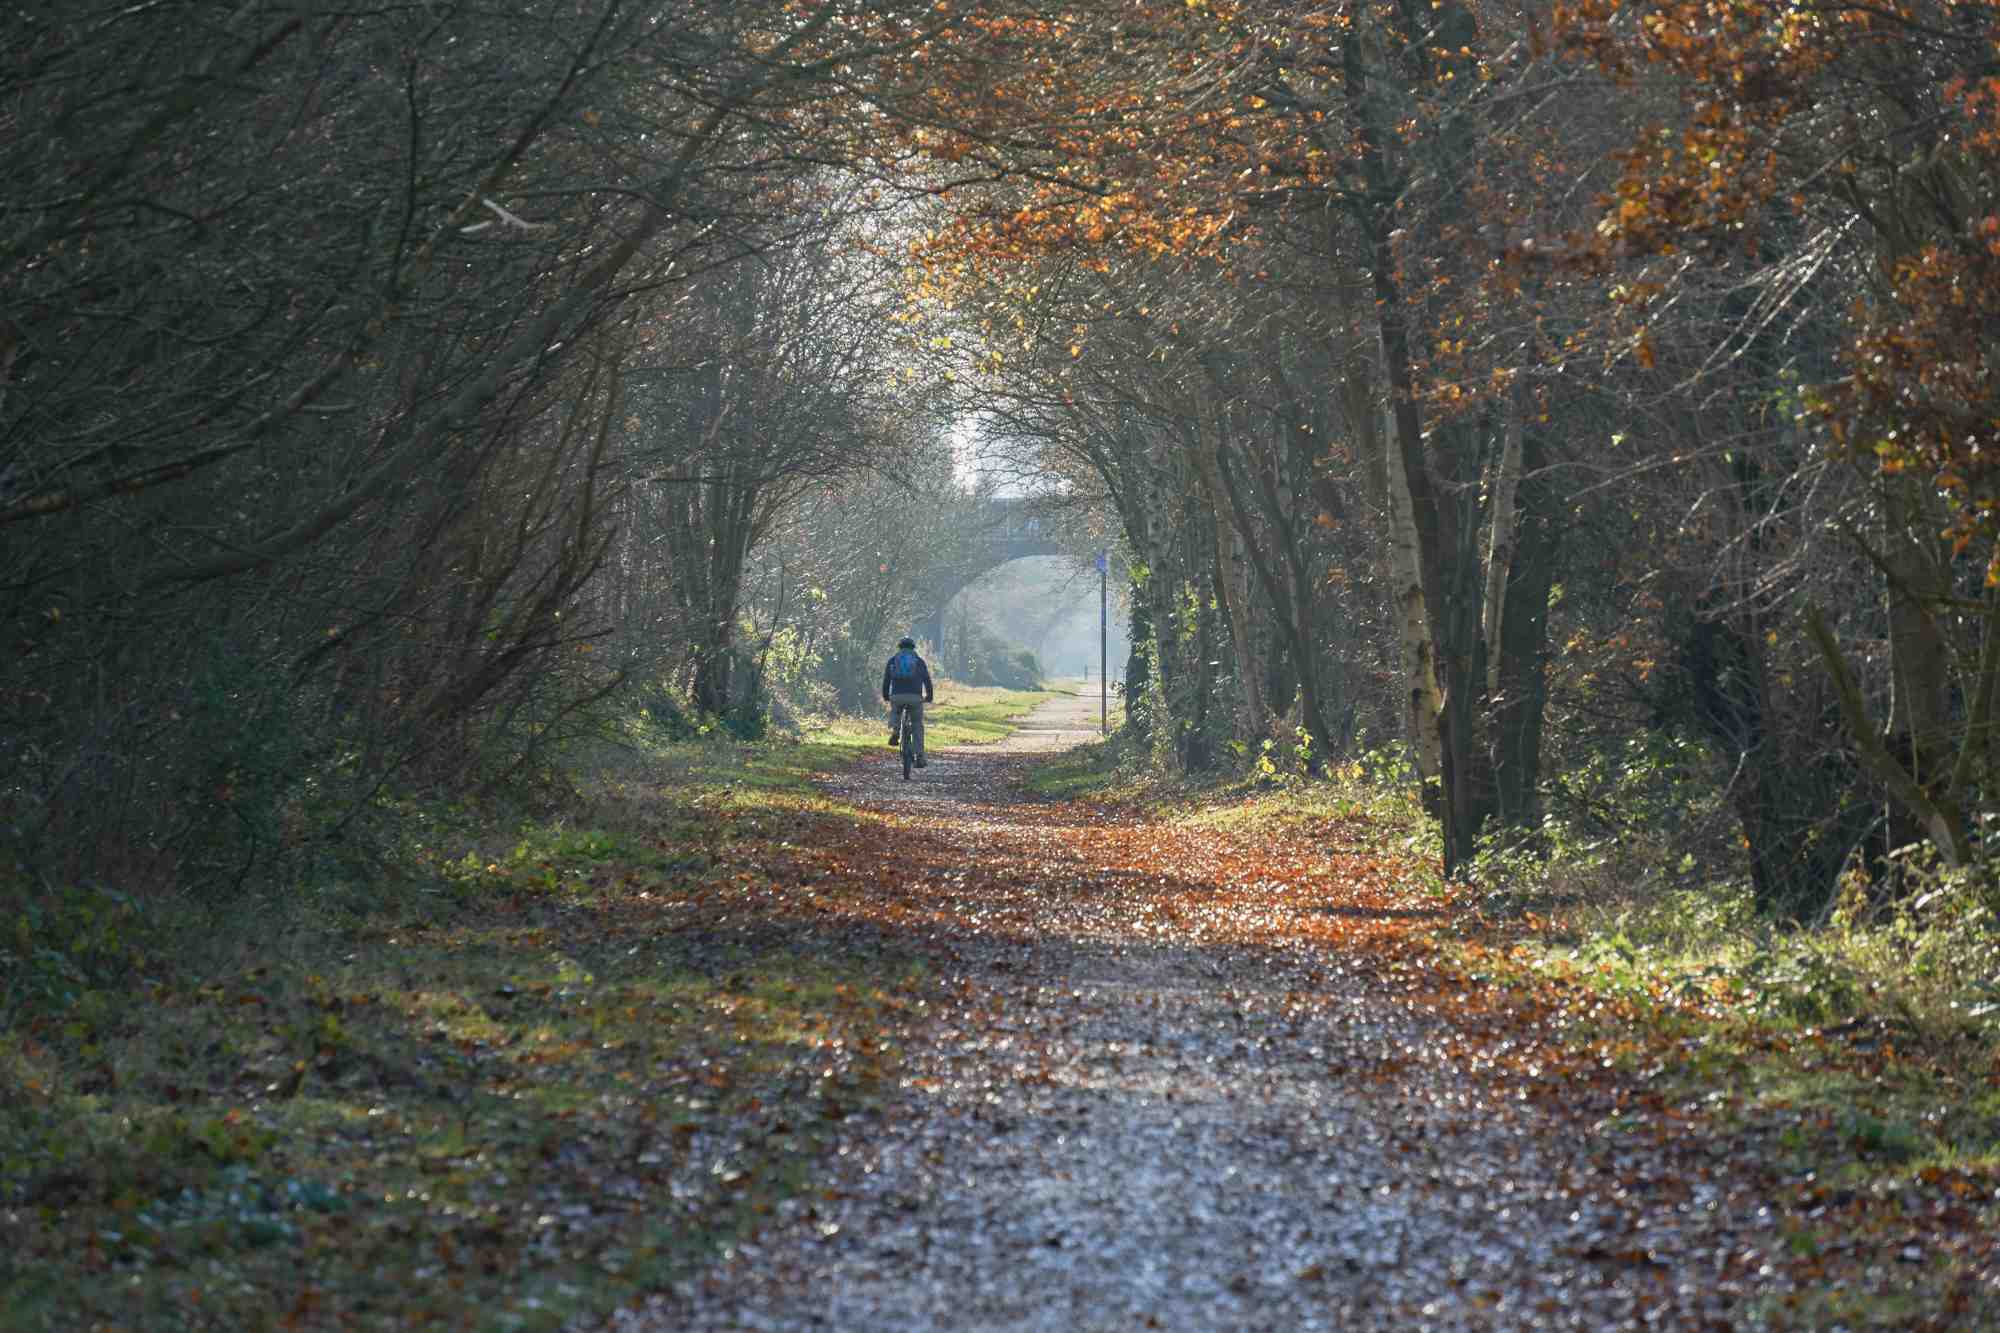 Autumn cycle trail through a forest